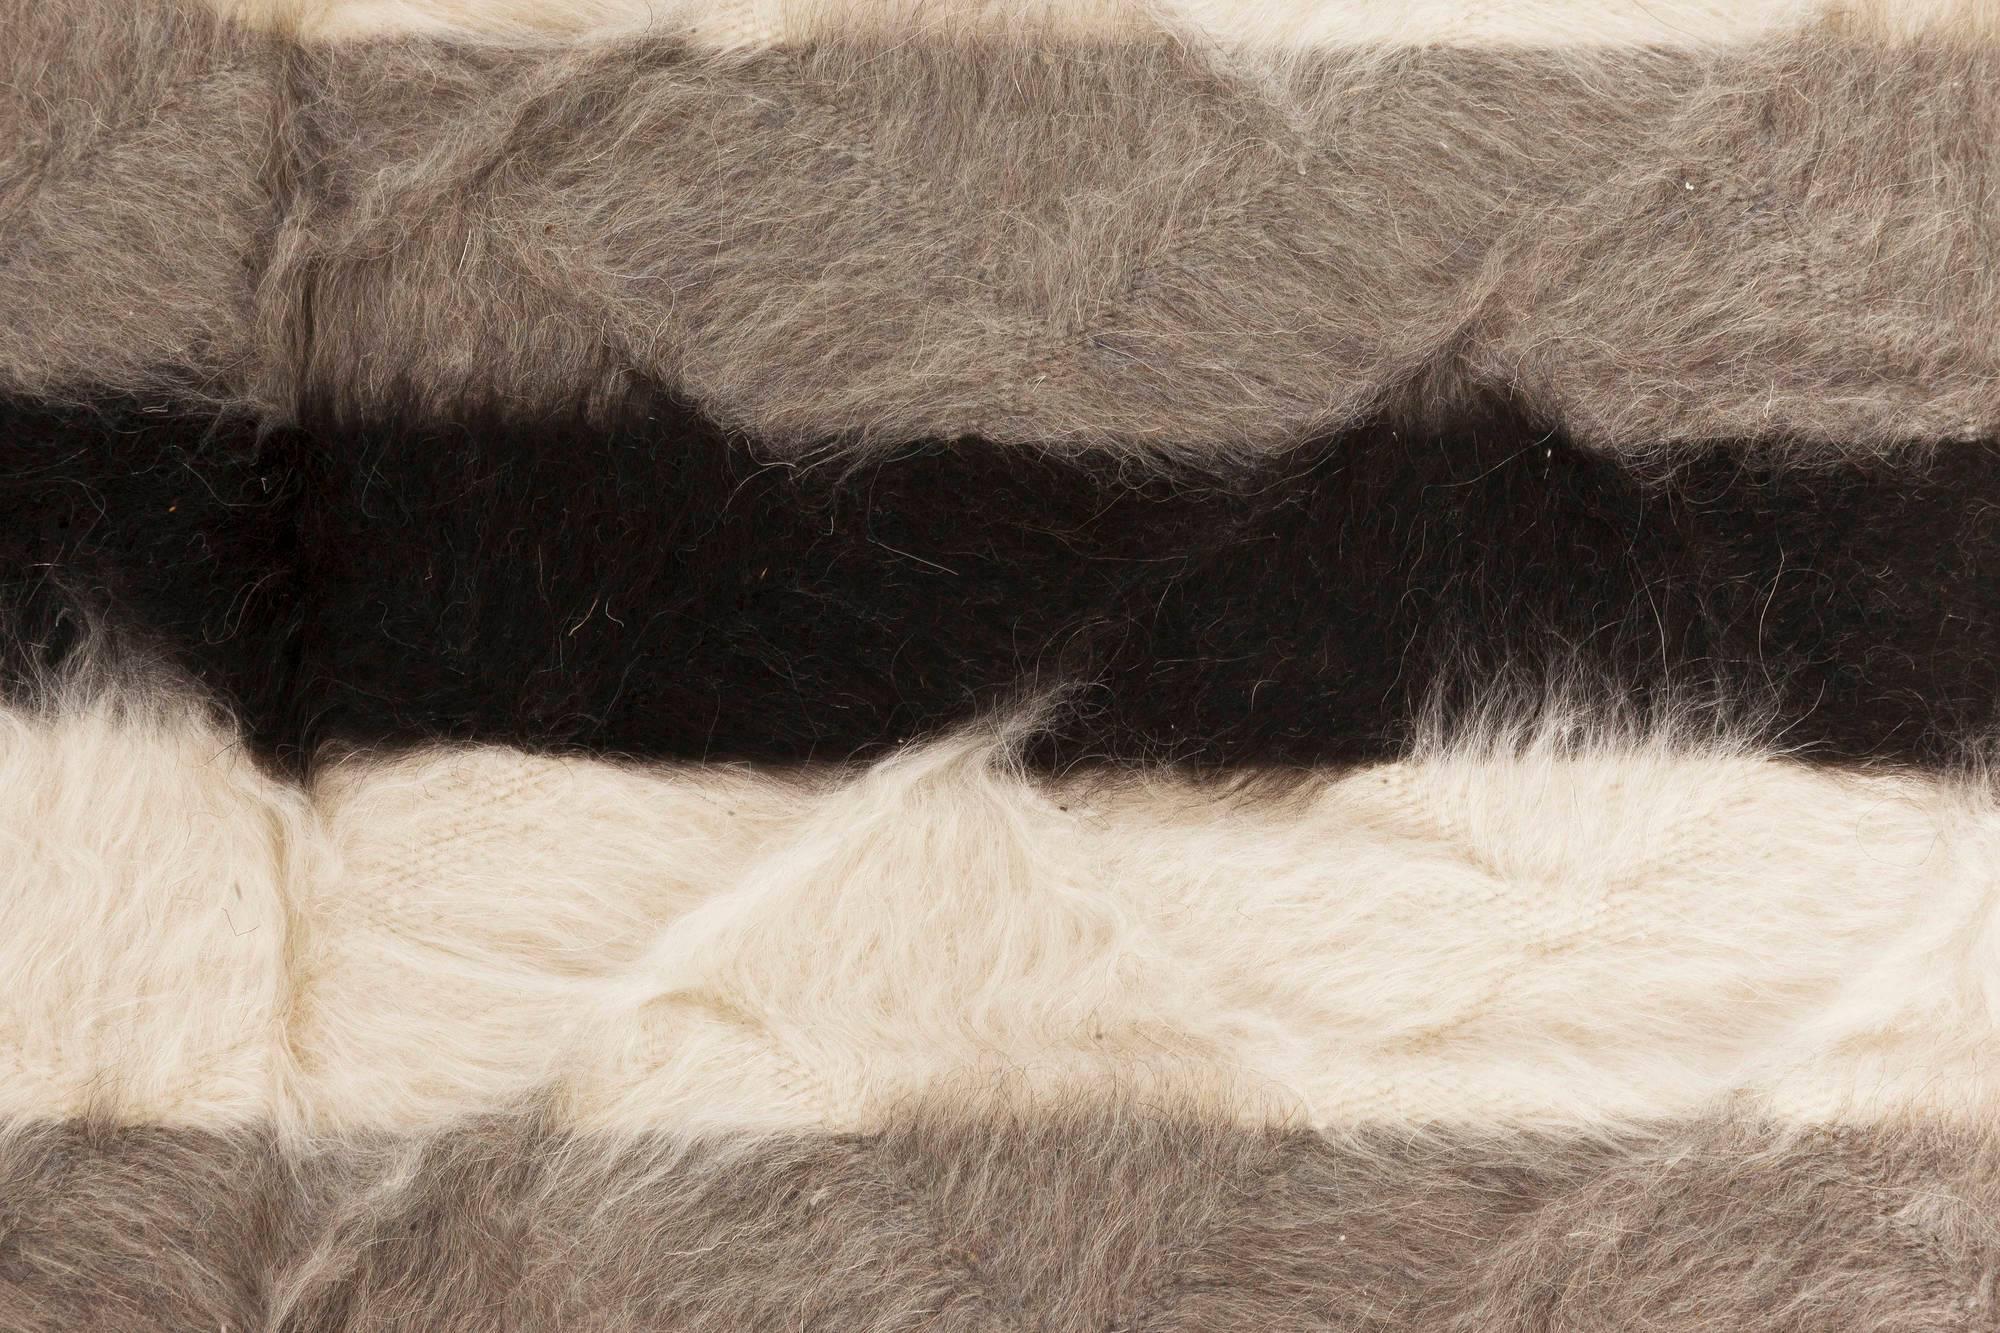 Taurus Collection Modern striped goat hair rug by Doris Leslie Blau.
Size: 4'0